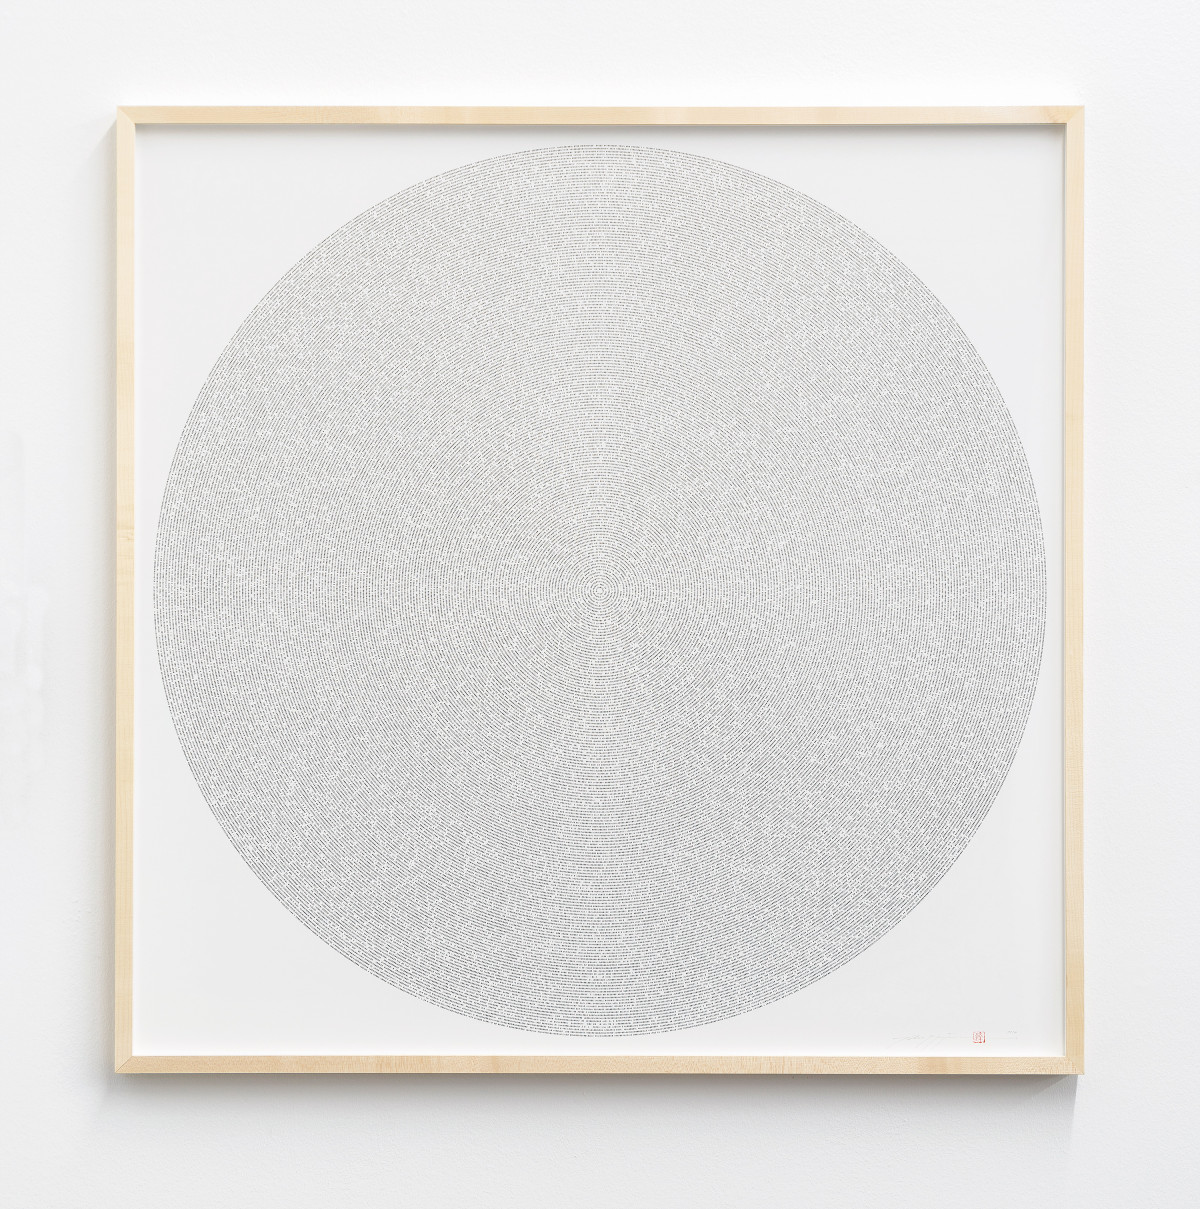 Tatsuo Miyajima, ‘Innumerable Counts Circle - digital font’, 2017, computer print on paper, unique